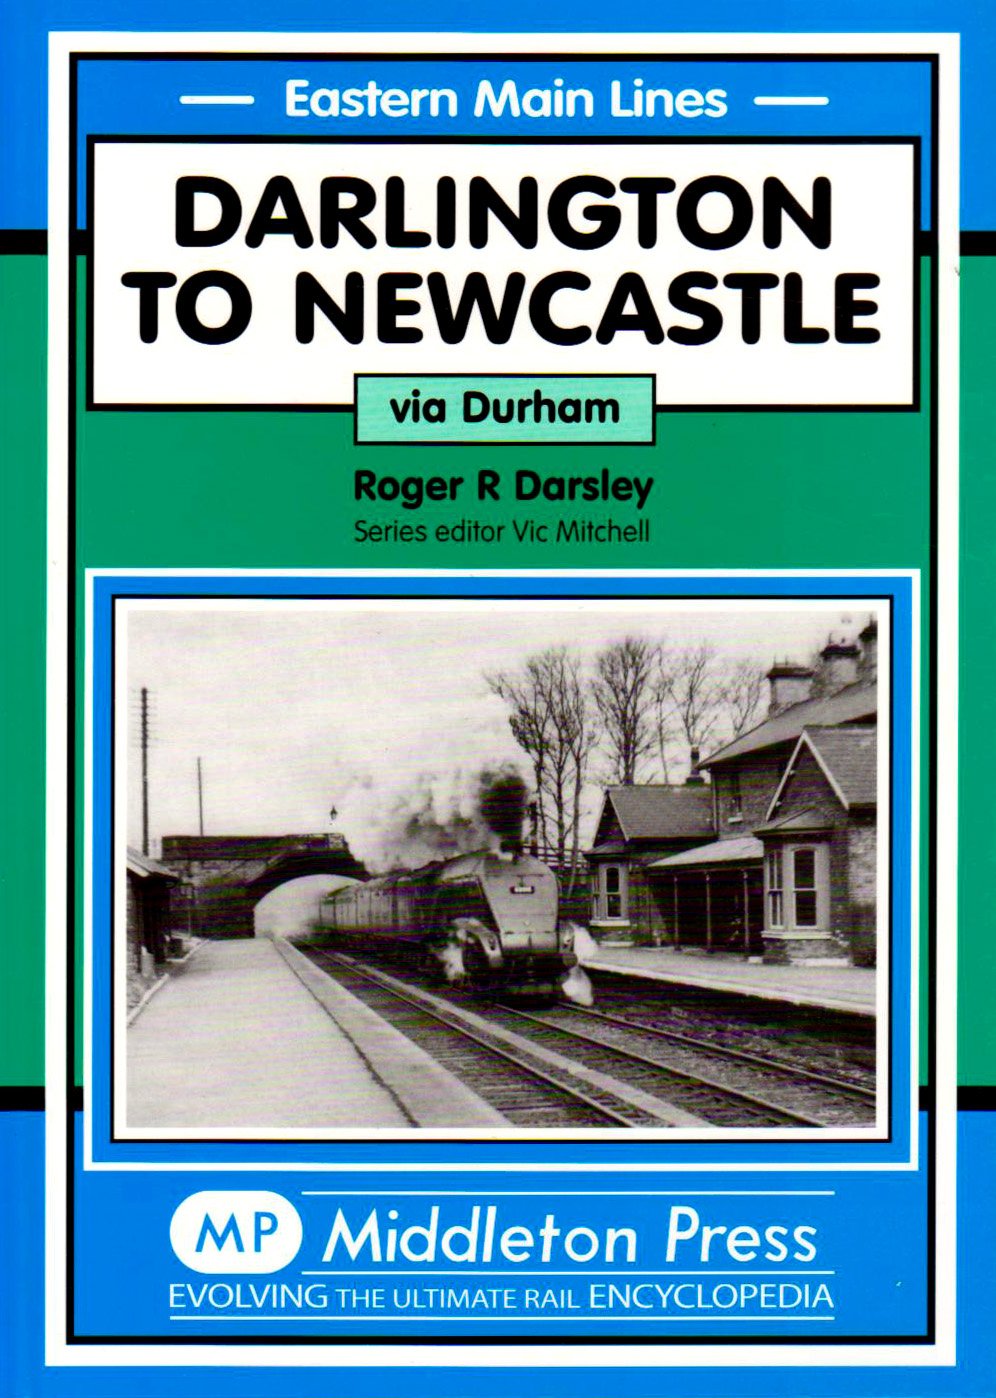 Eastern Main Lines Darlington to Newcastle via Durham